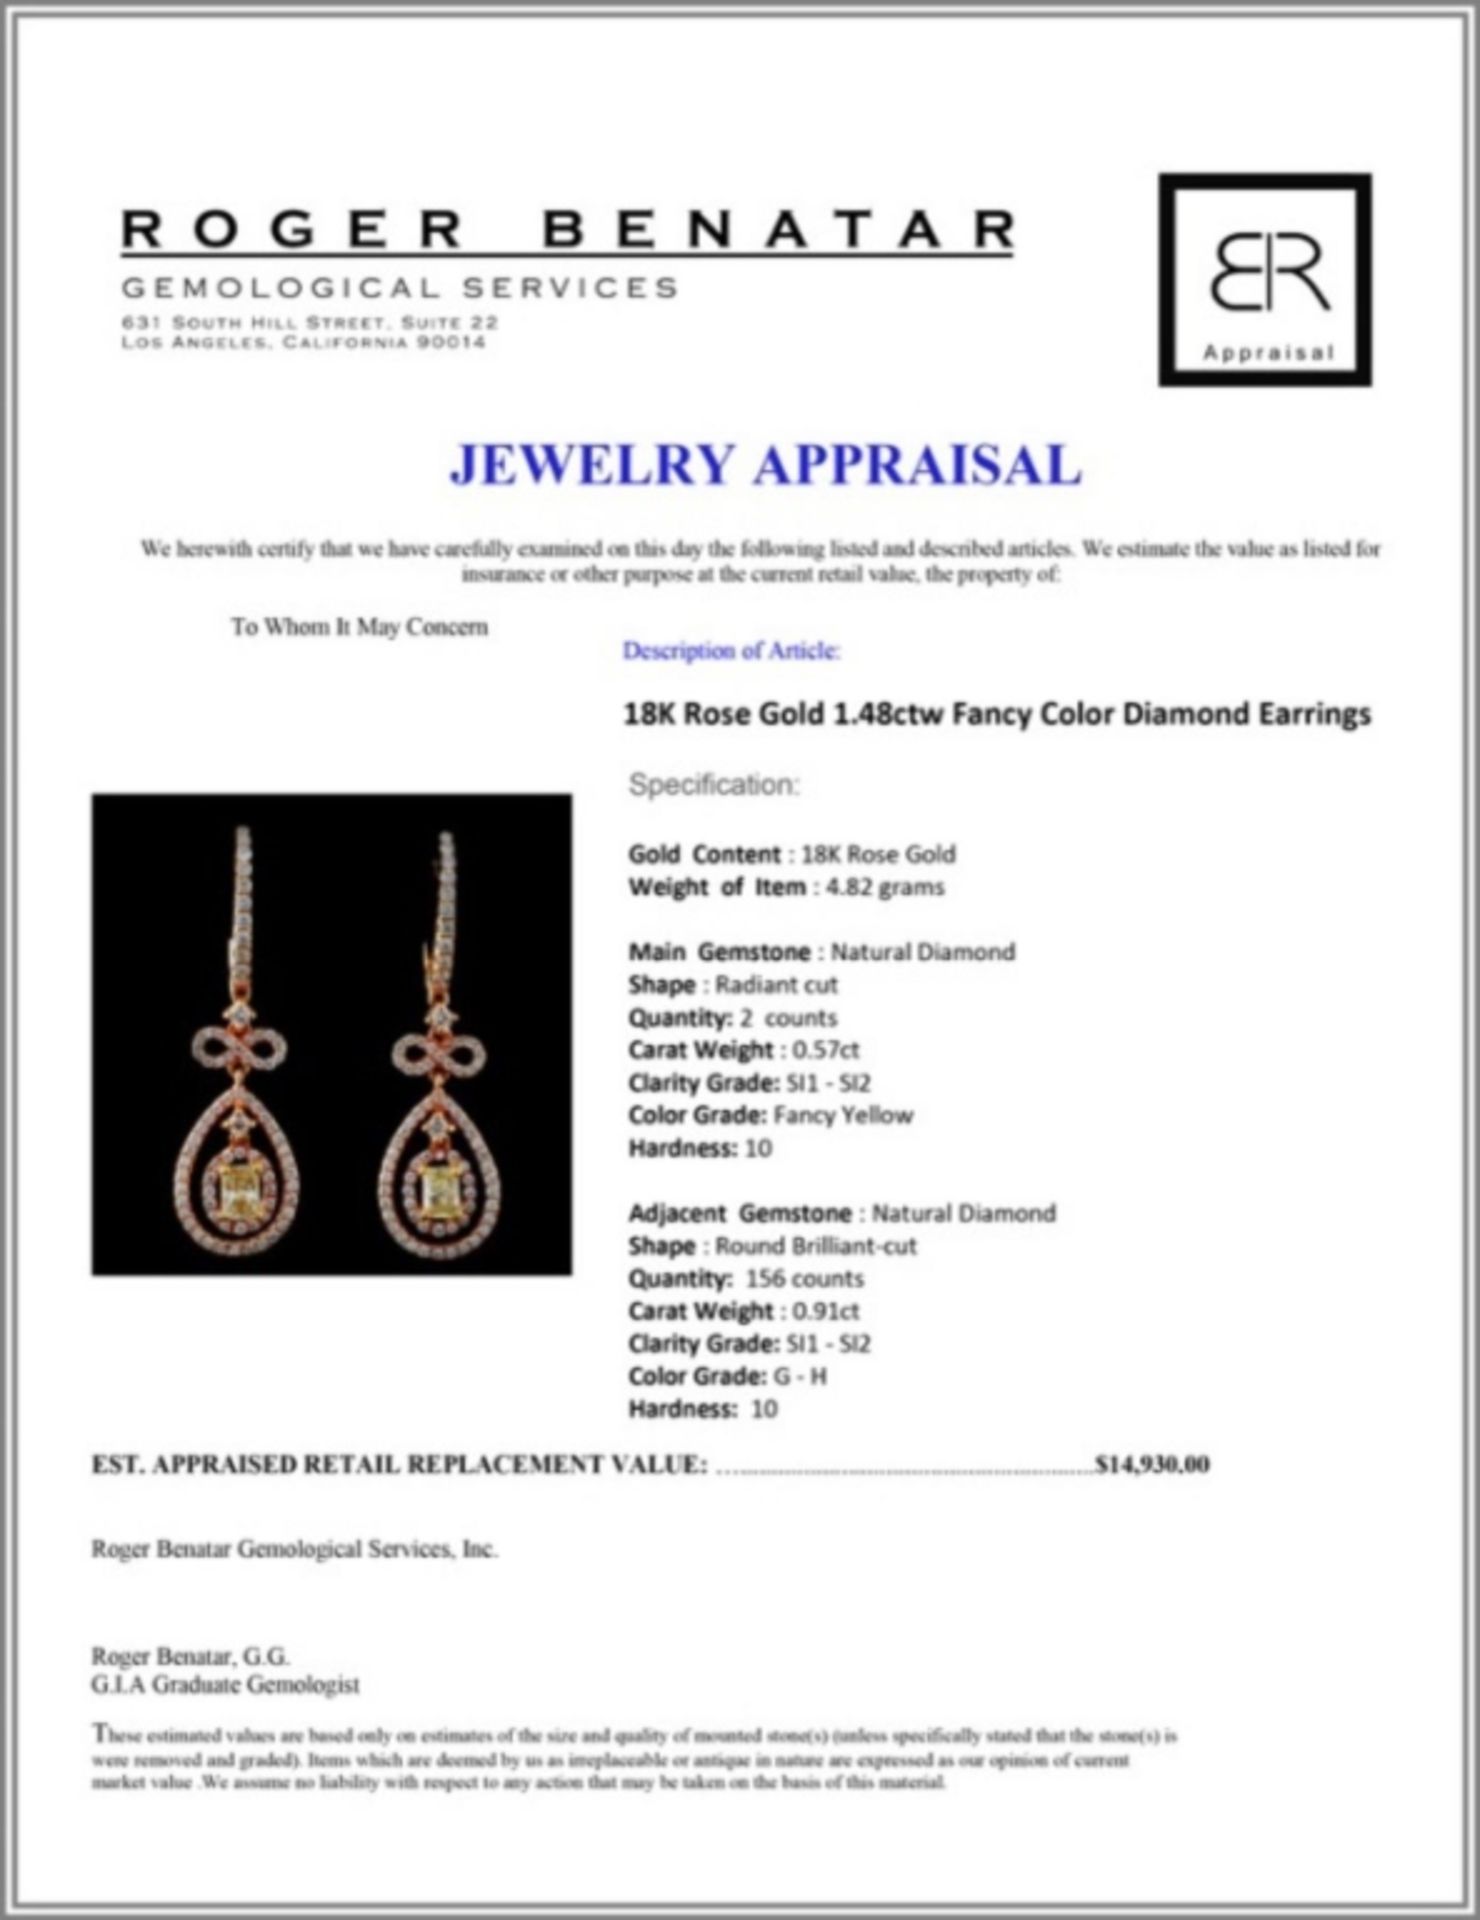 18K Rose Gold 1.48ctw Fancy Color Diamond Earrings - Image 3 of 3